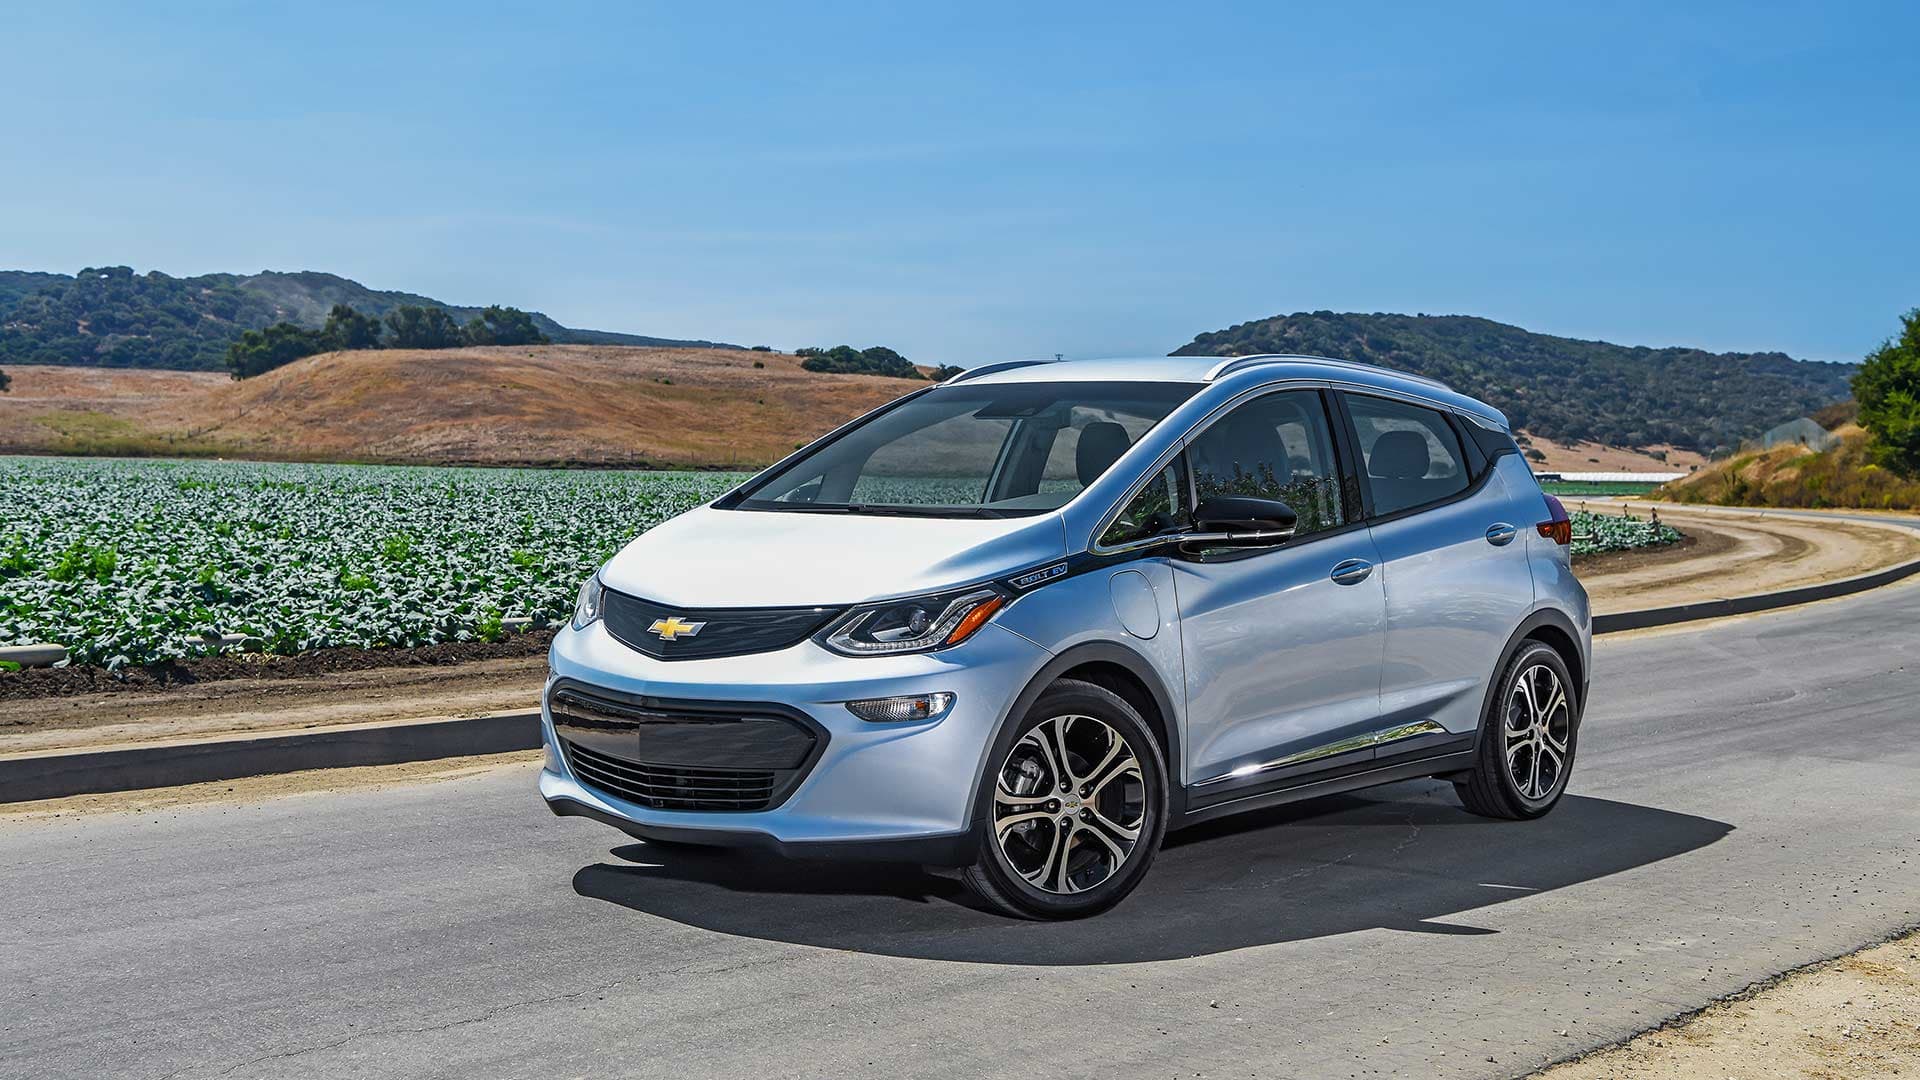 General Motors Calls for National Zero Emissions Vehicle Program